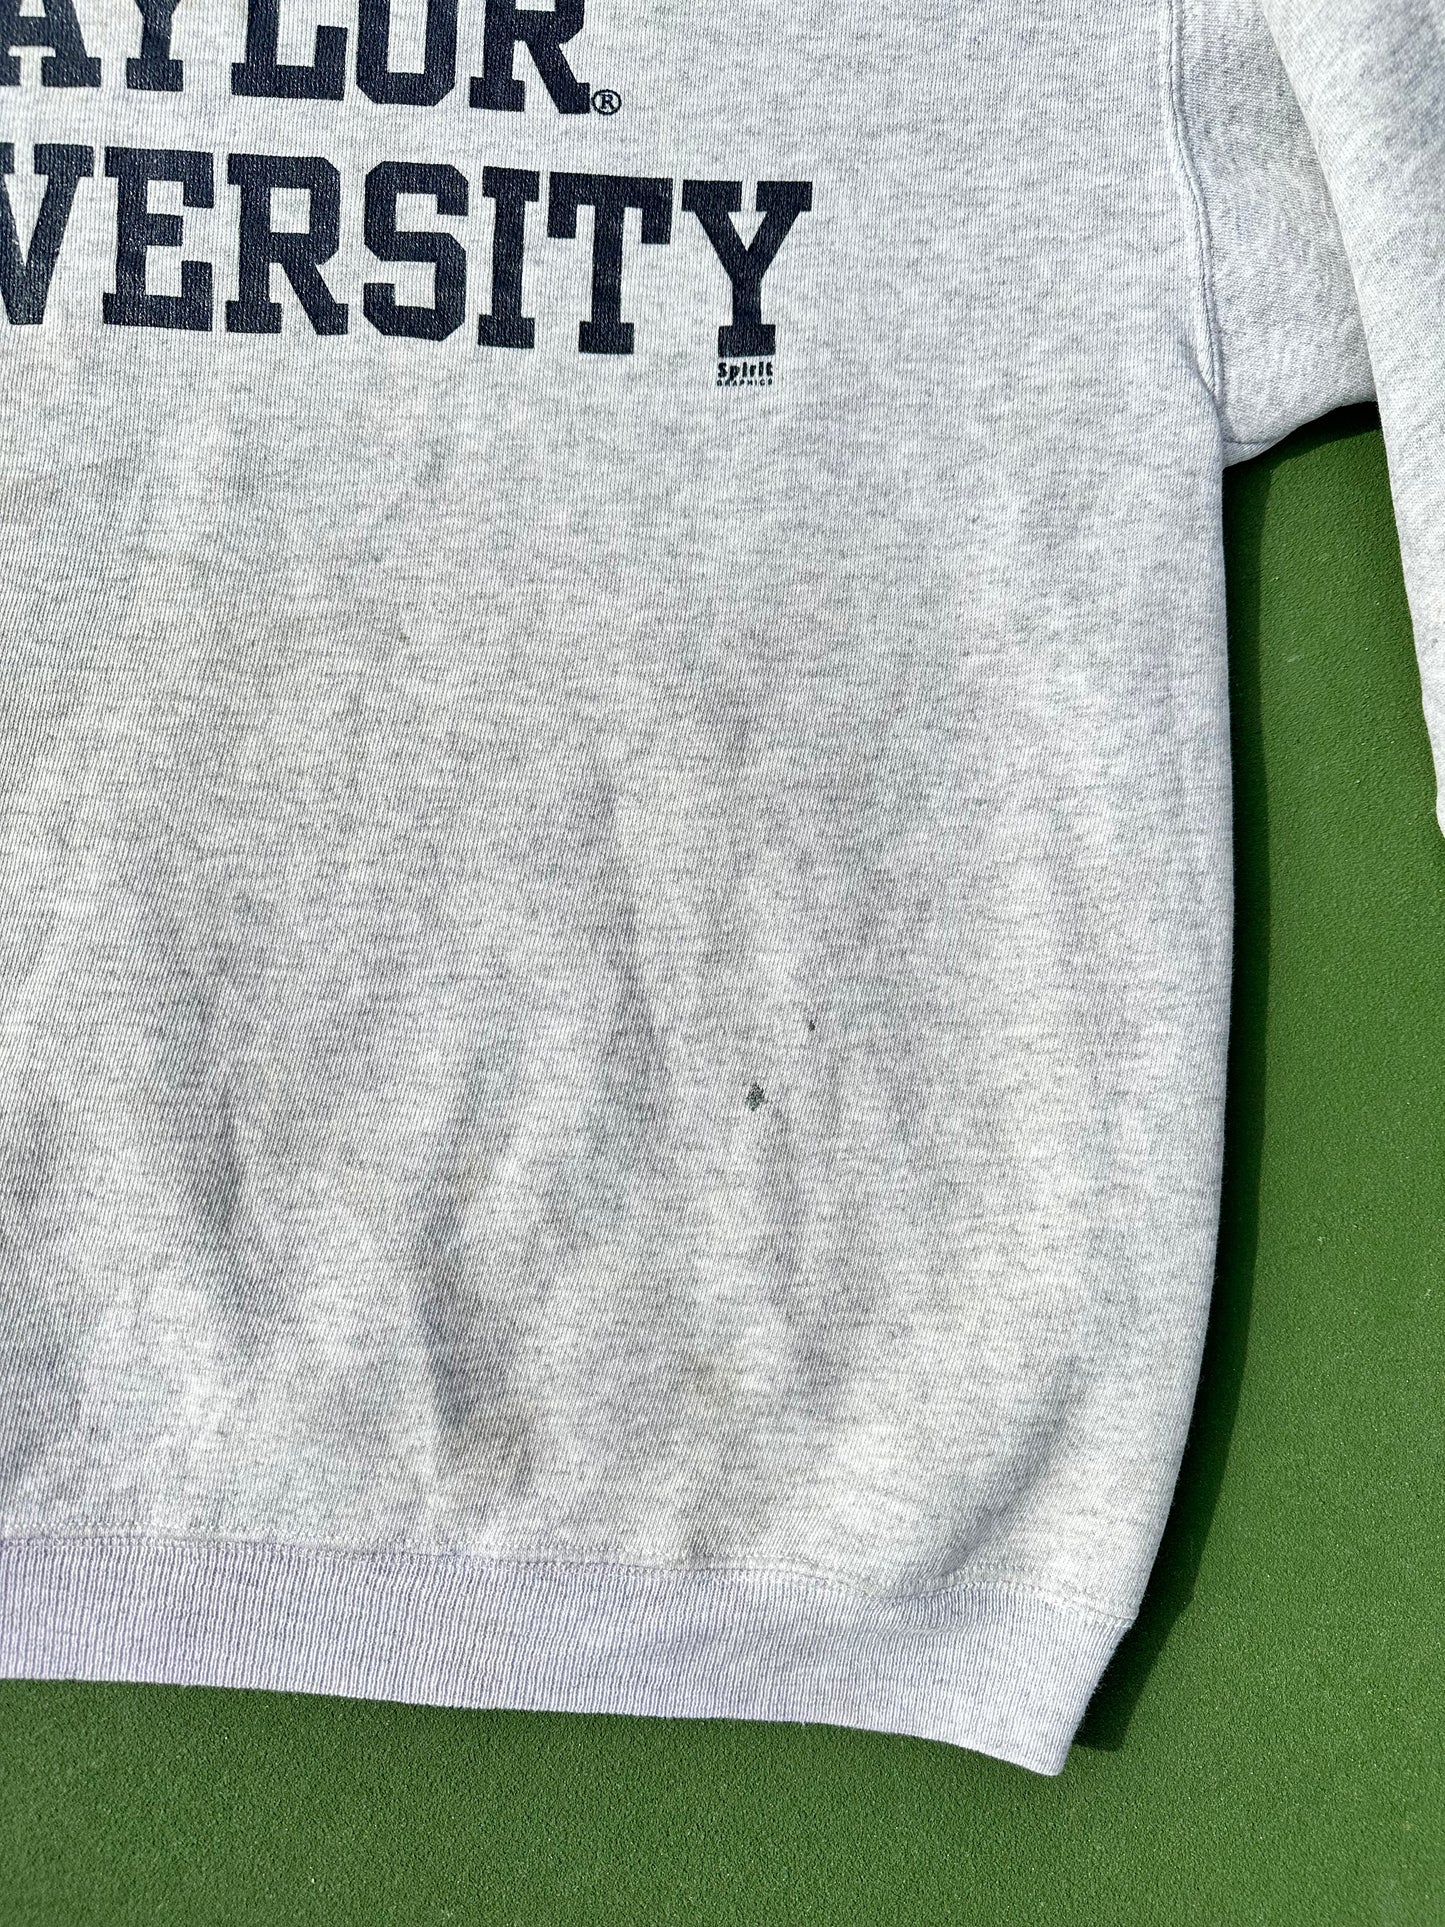 Vintage Baylor University Sweatshirt